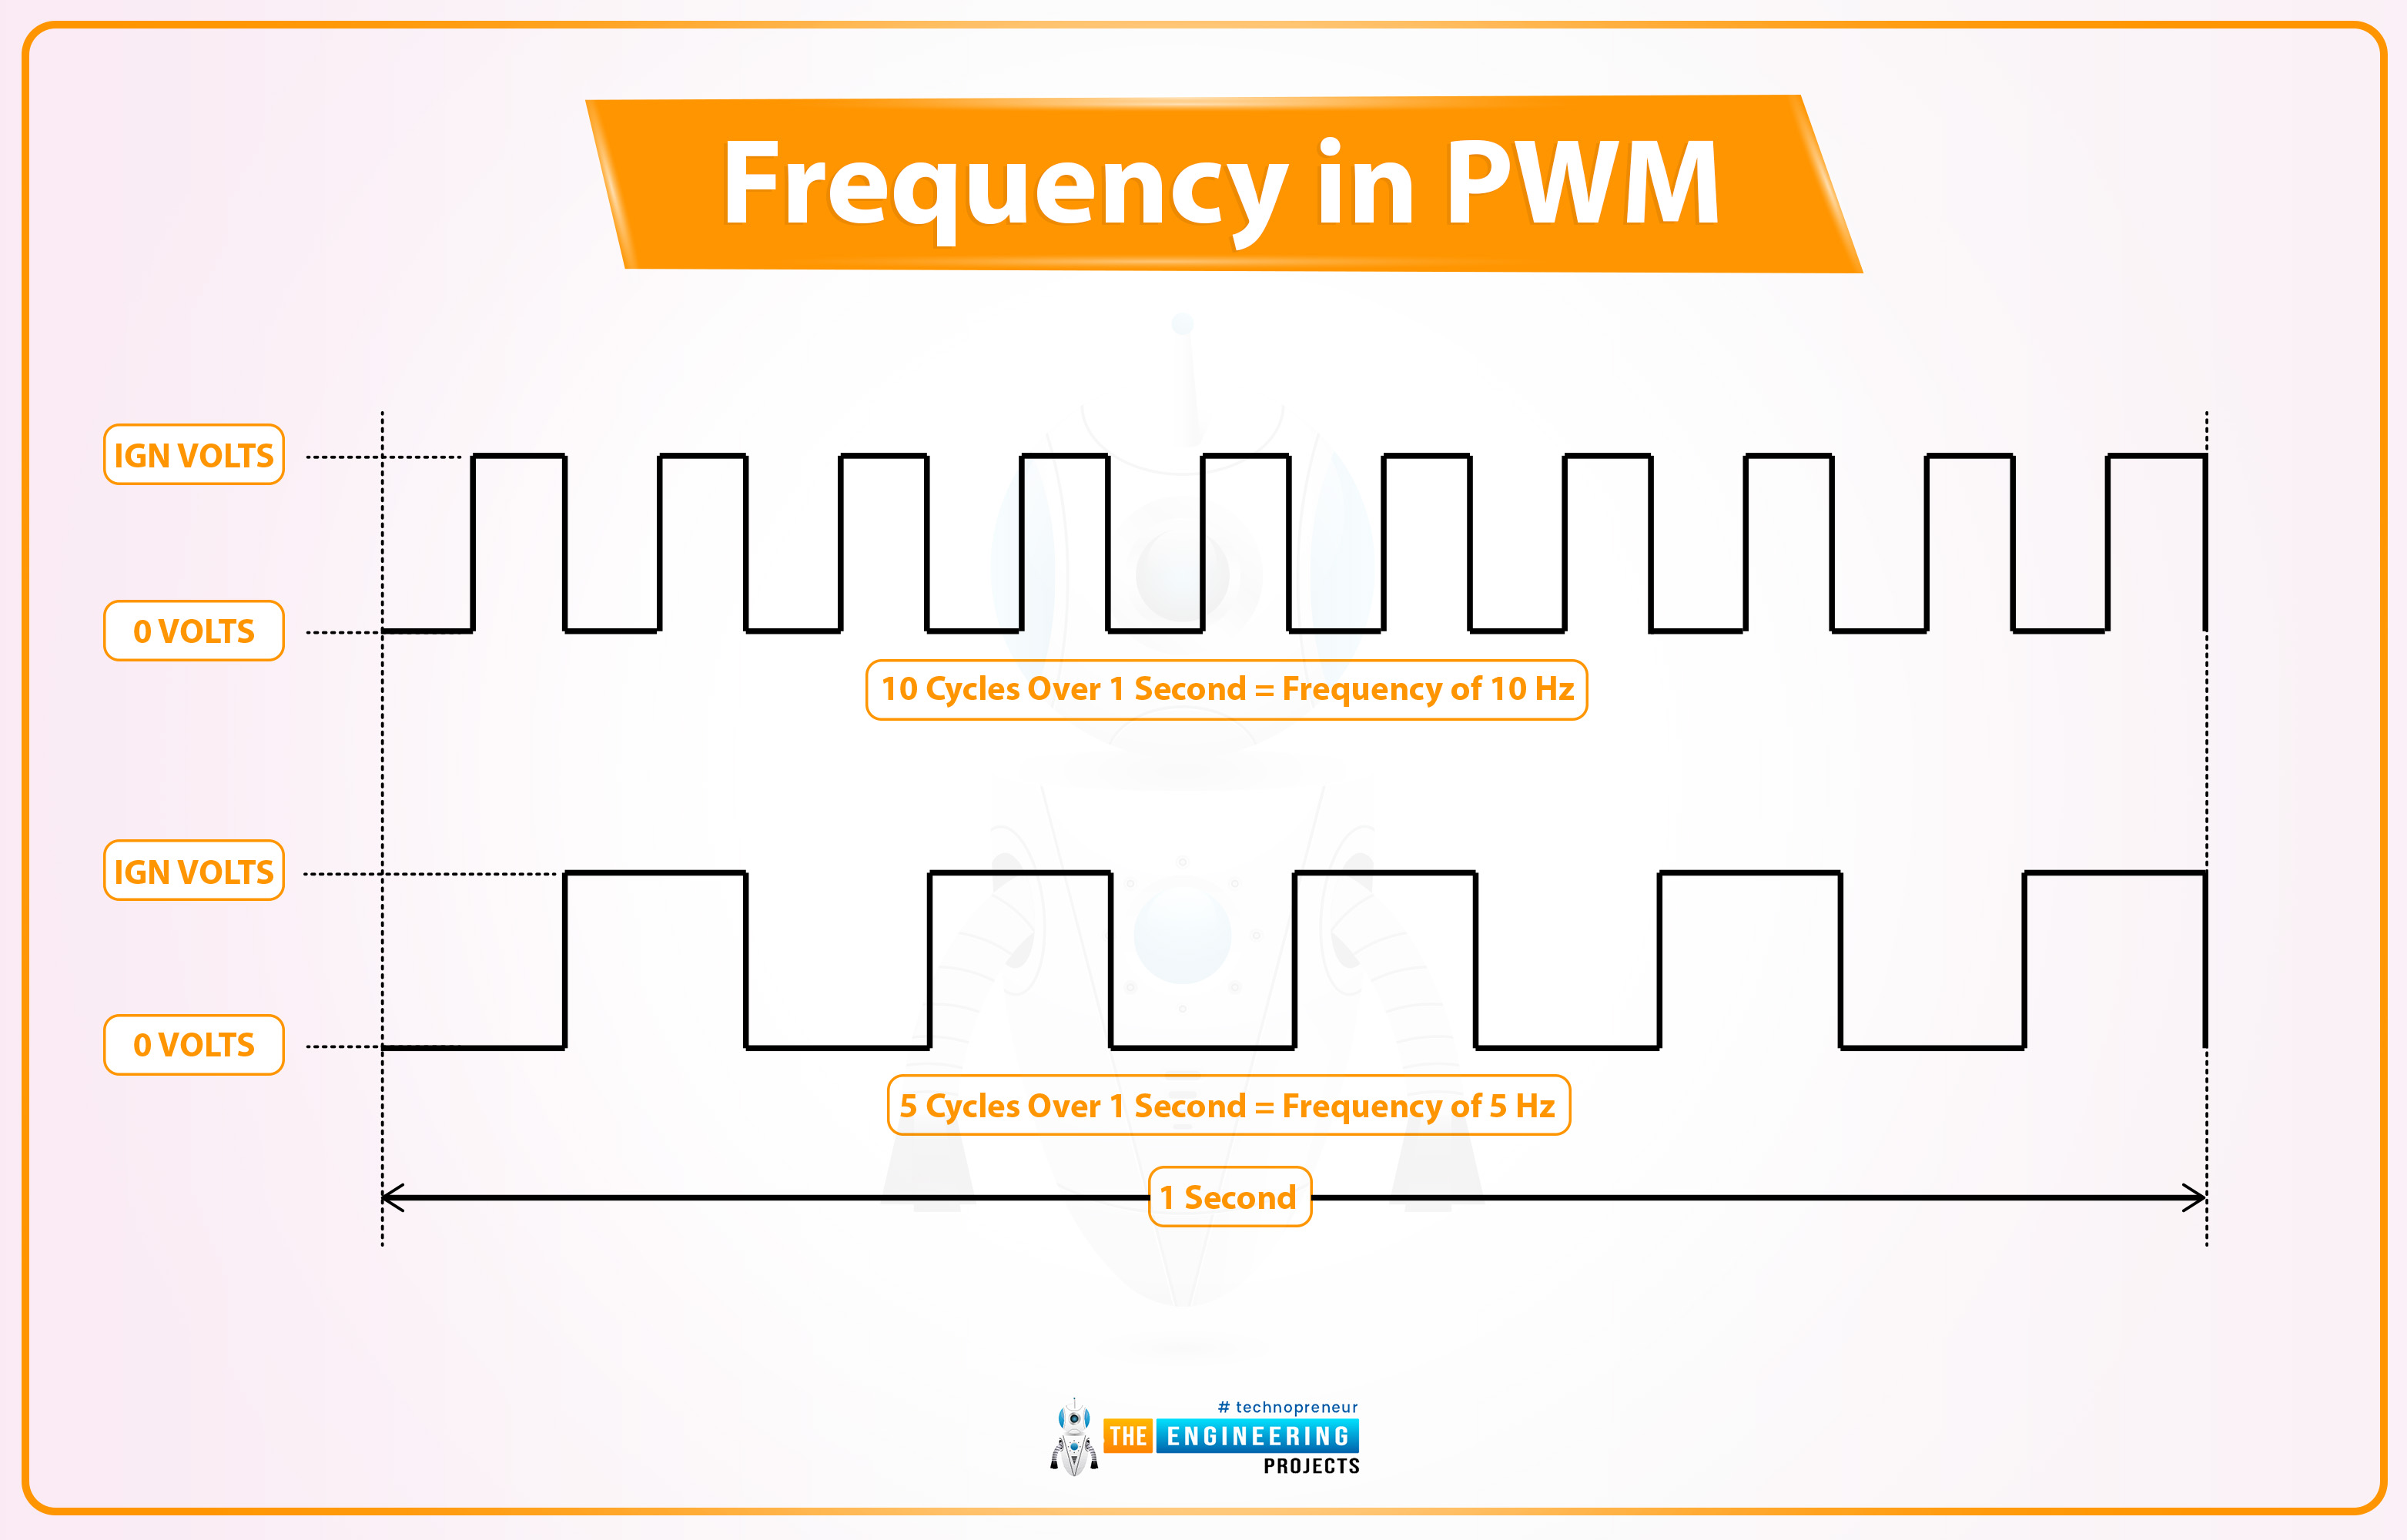 ESP32 PWM, PWM ESP32, PWM in ESP32, What is pulse width modulation, Implementing PWM using ESP32, ESP32 Arduino code for controlling LED brightness using PWM, PWM specifications, PWM ESP32 motor control, ESP32 PWM led brightness control